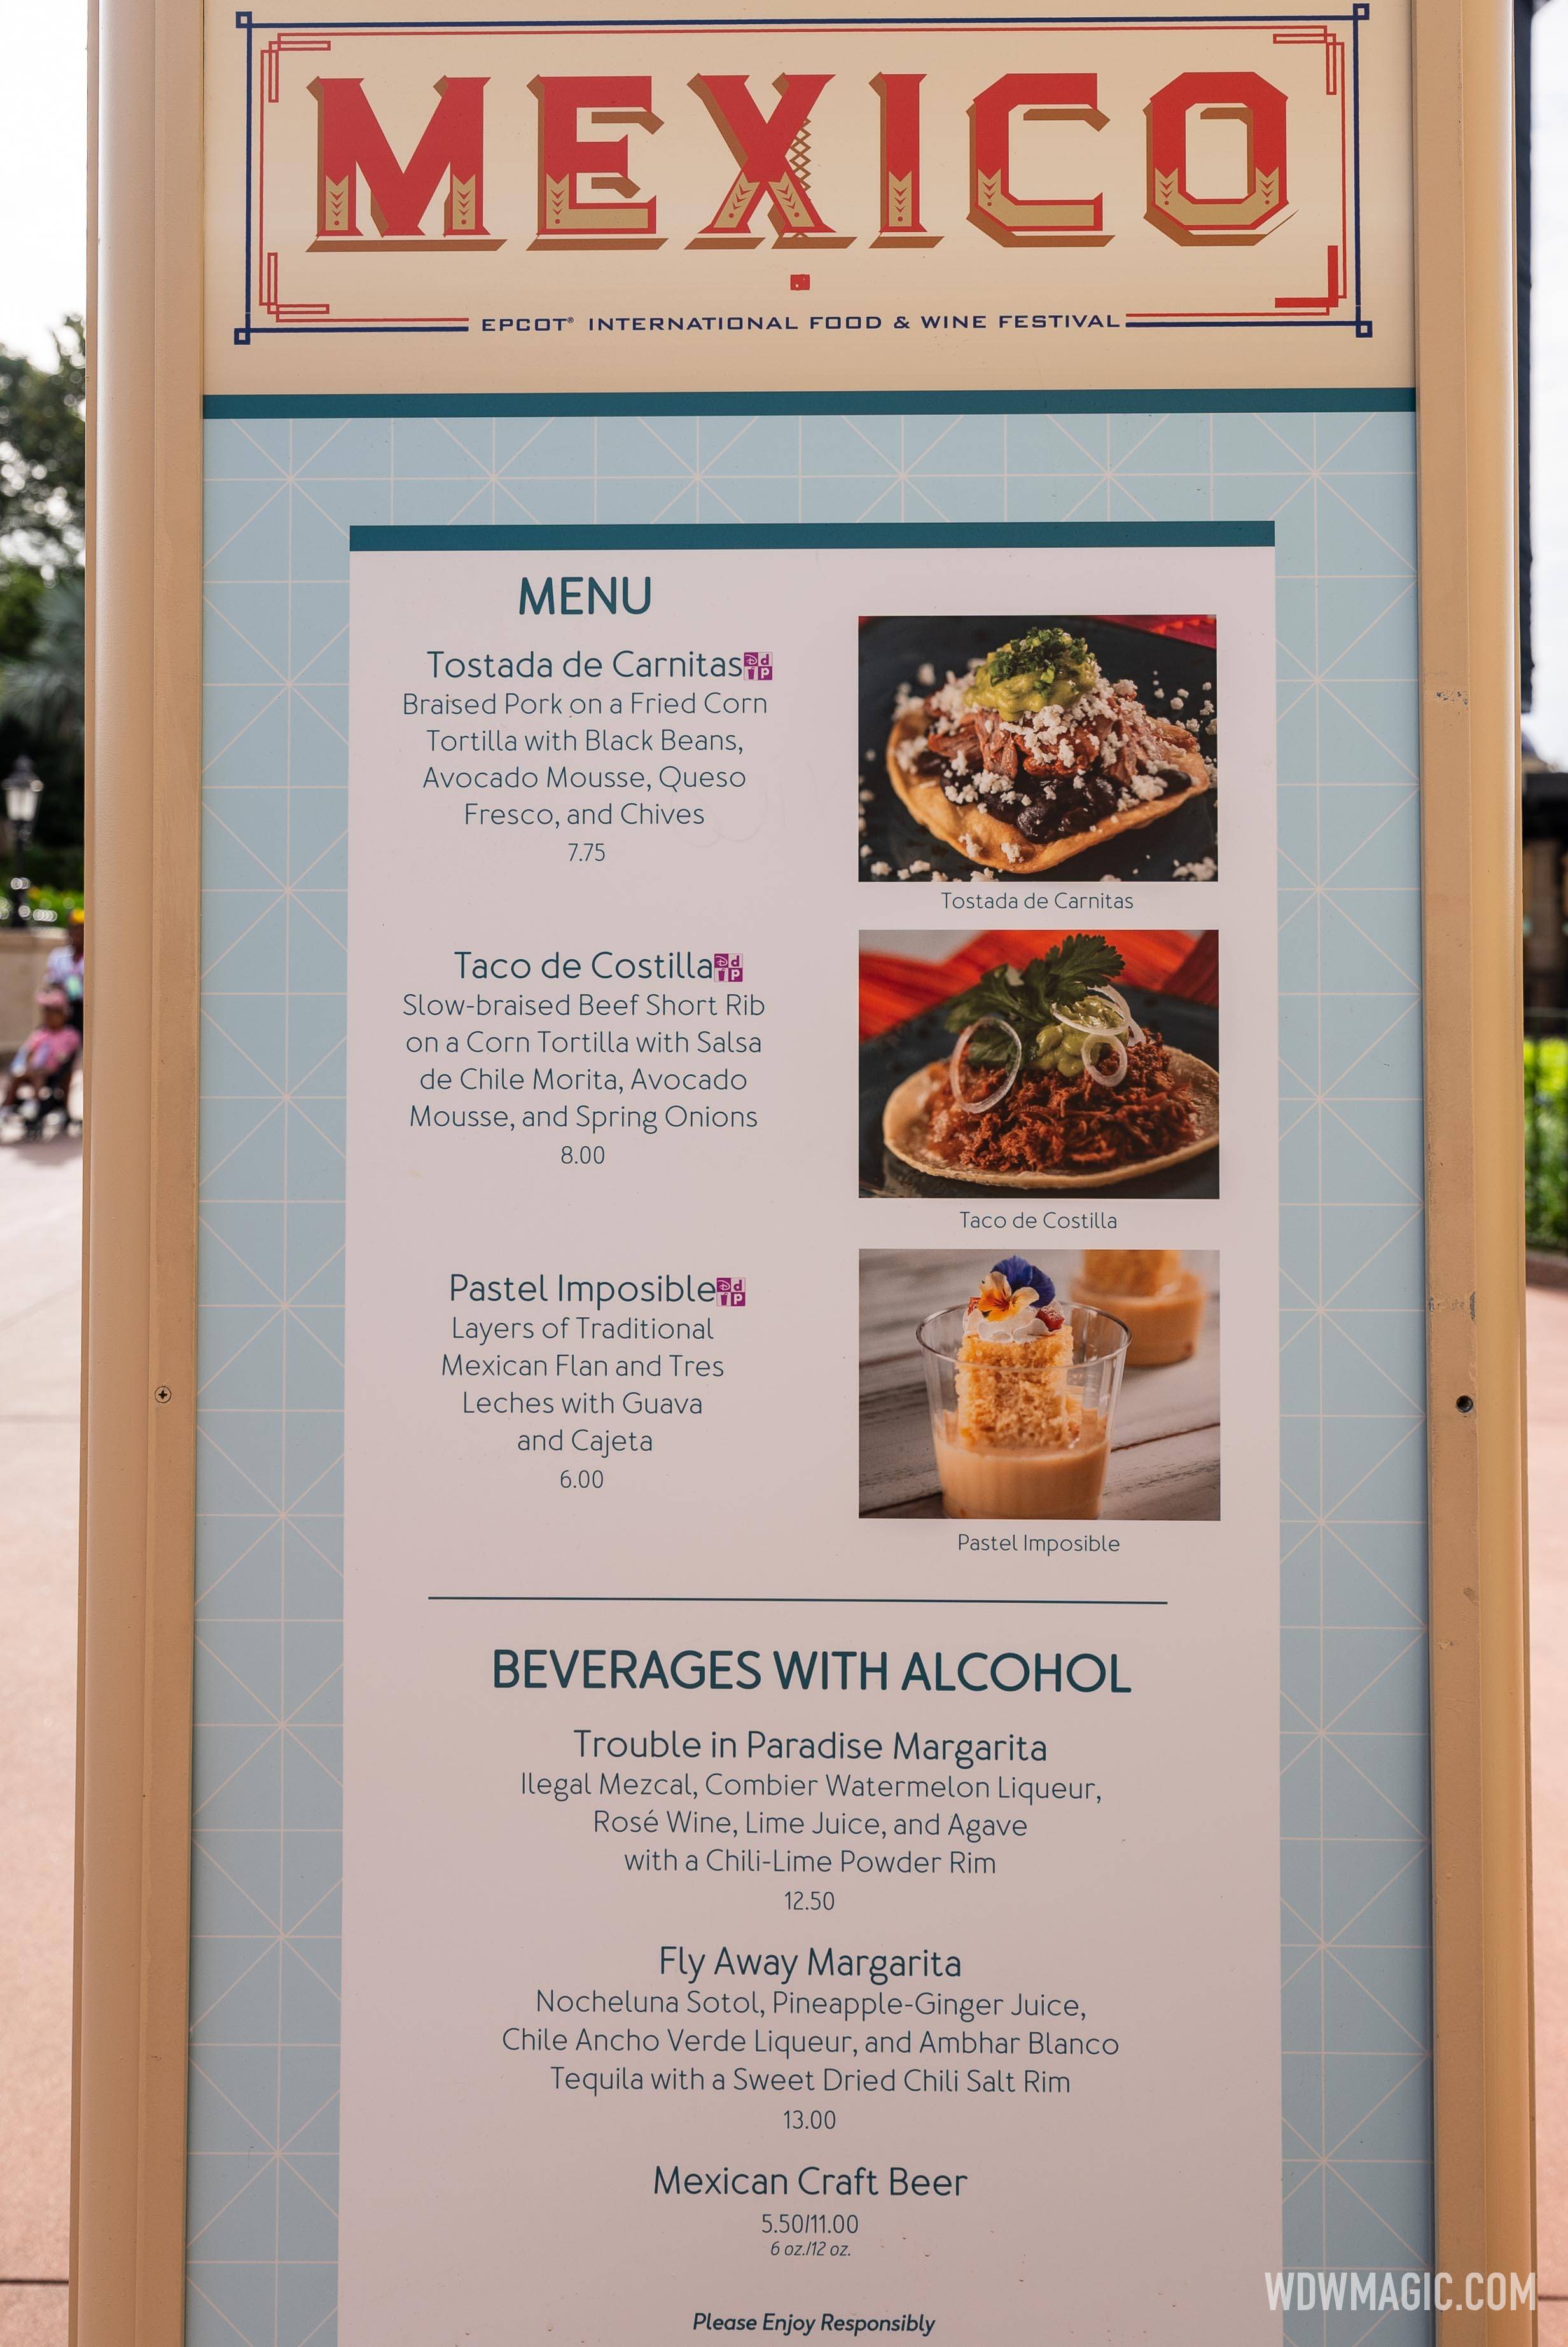 Mexico Marketplace Kiosk menu